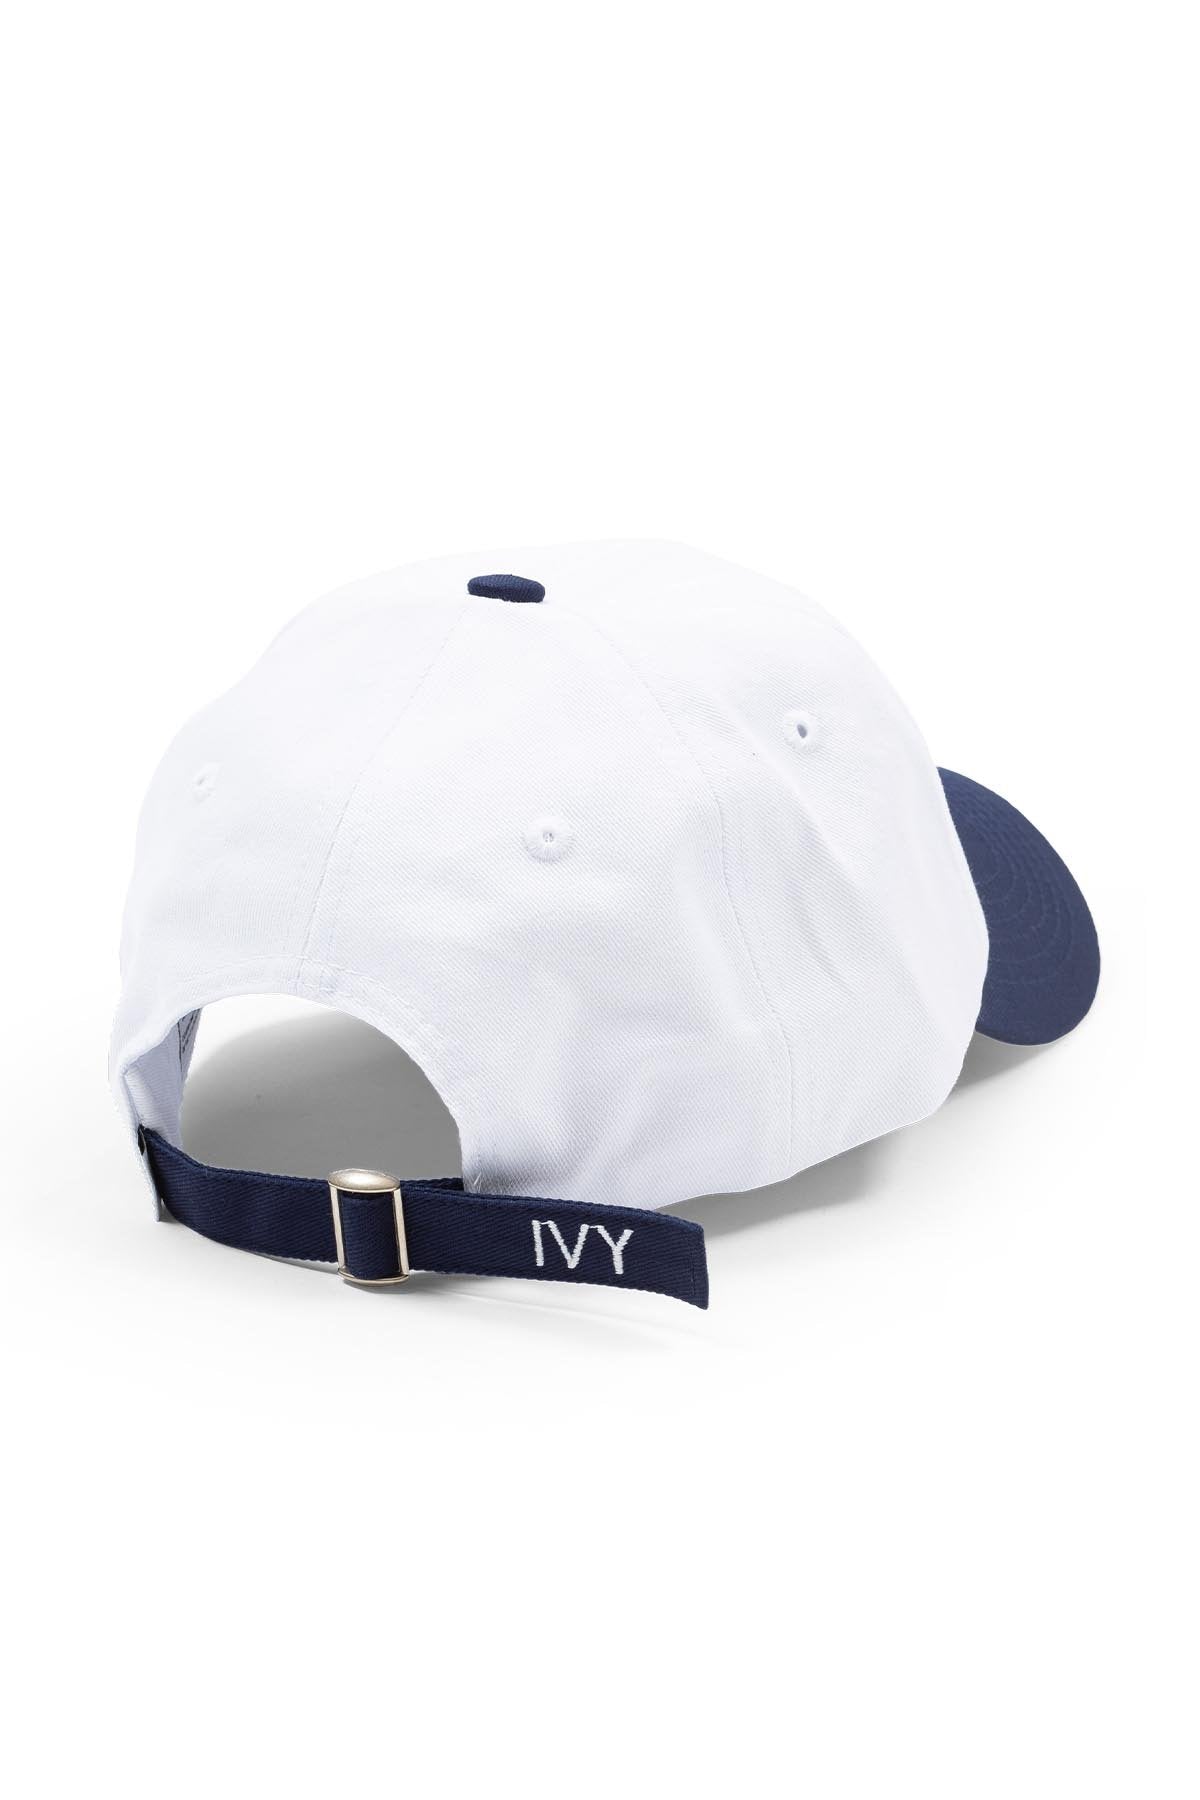 AN IVY Caps White Navy The Ivy Club Cap